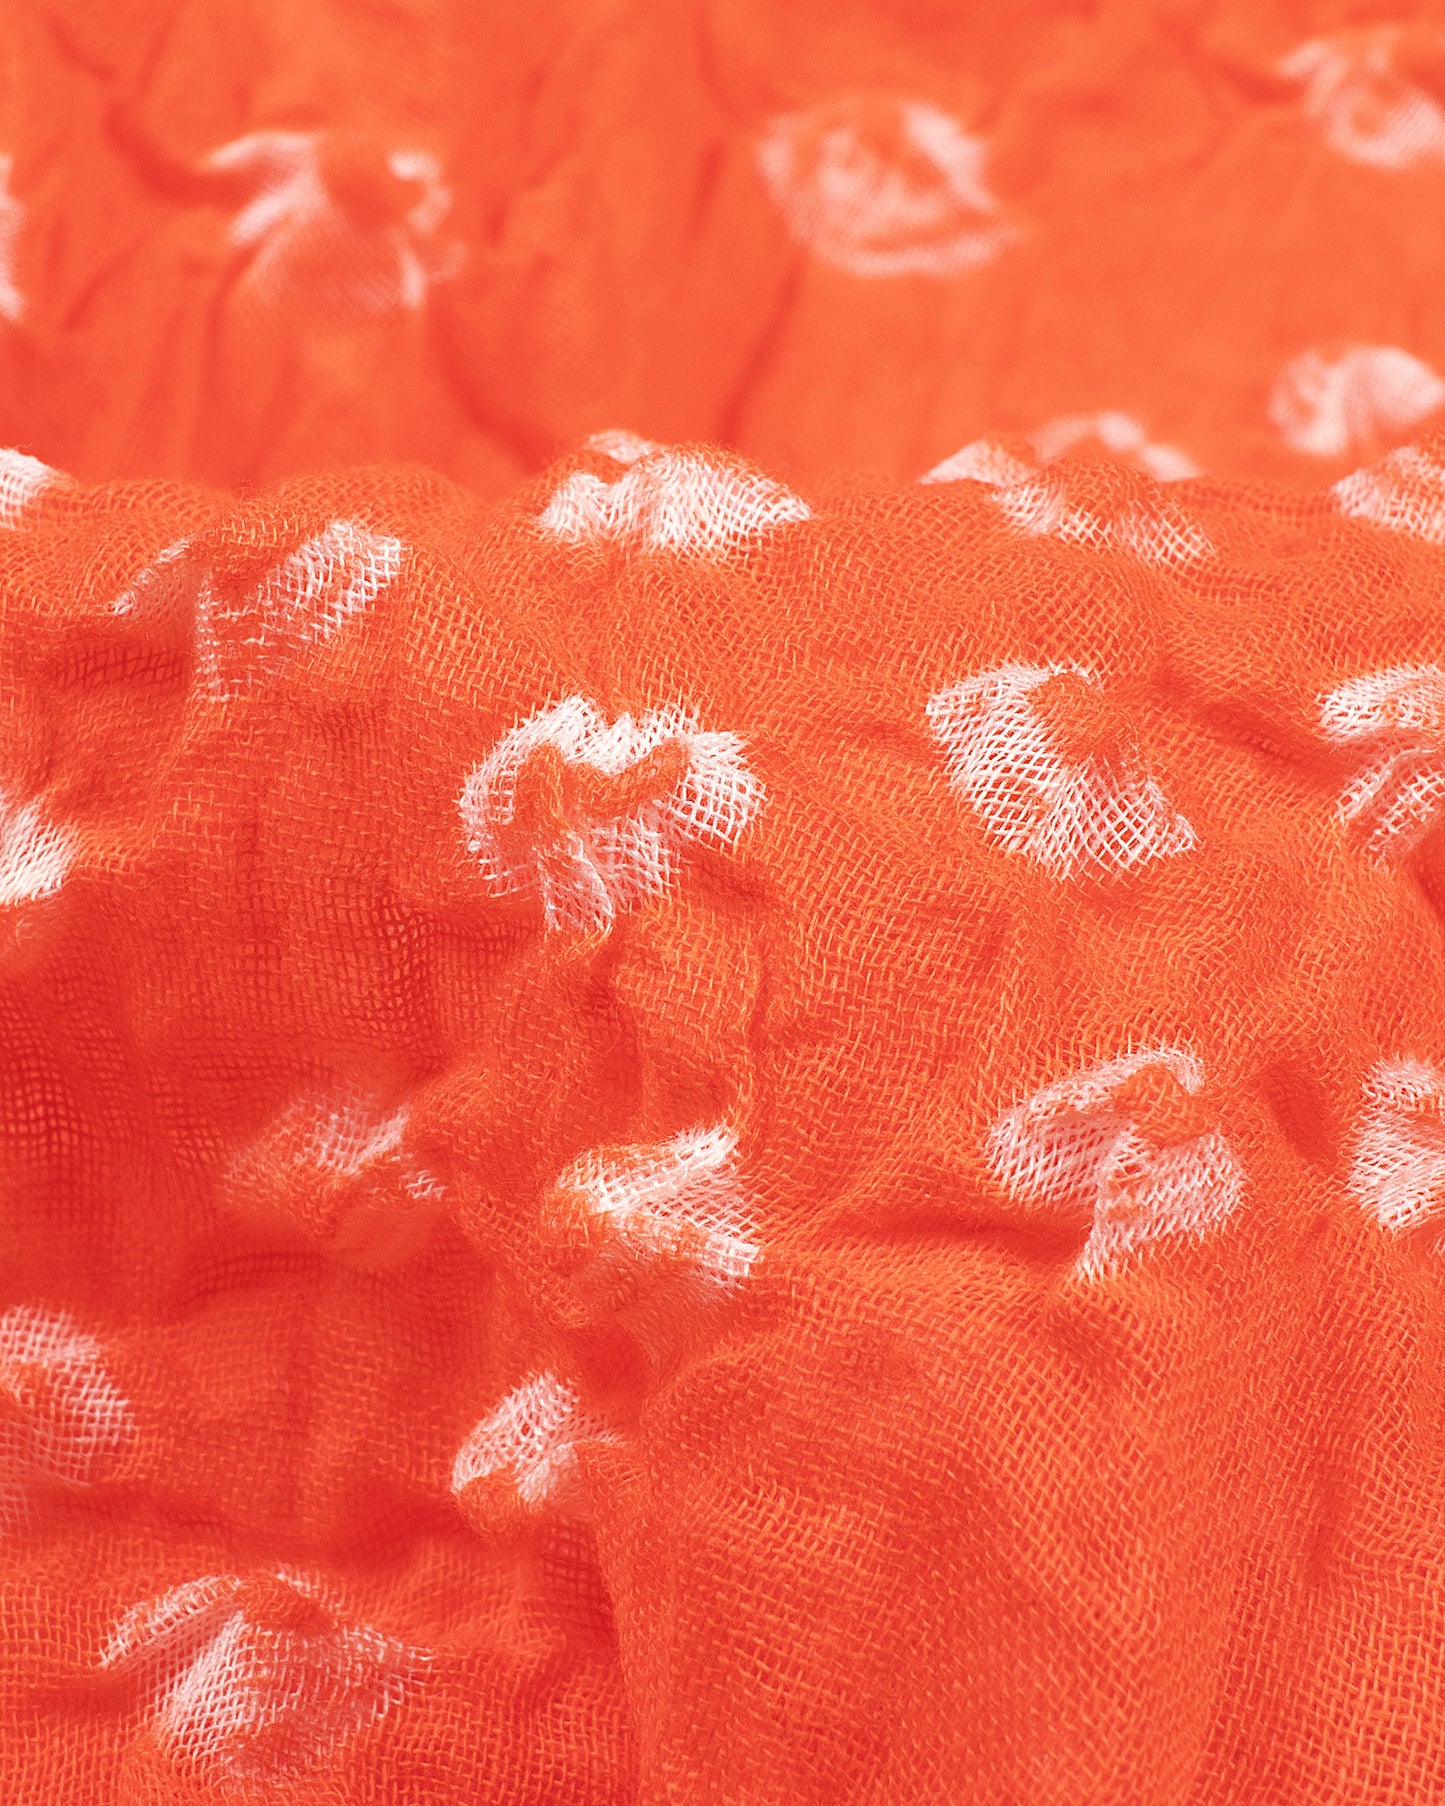 Salmon Orange Kutchhi Bandhani Tie & Dye Cotton Dupatta